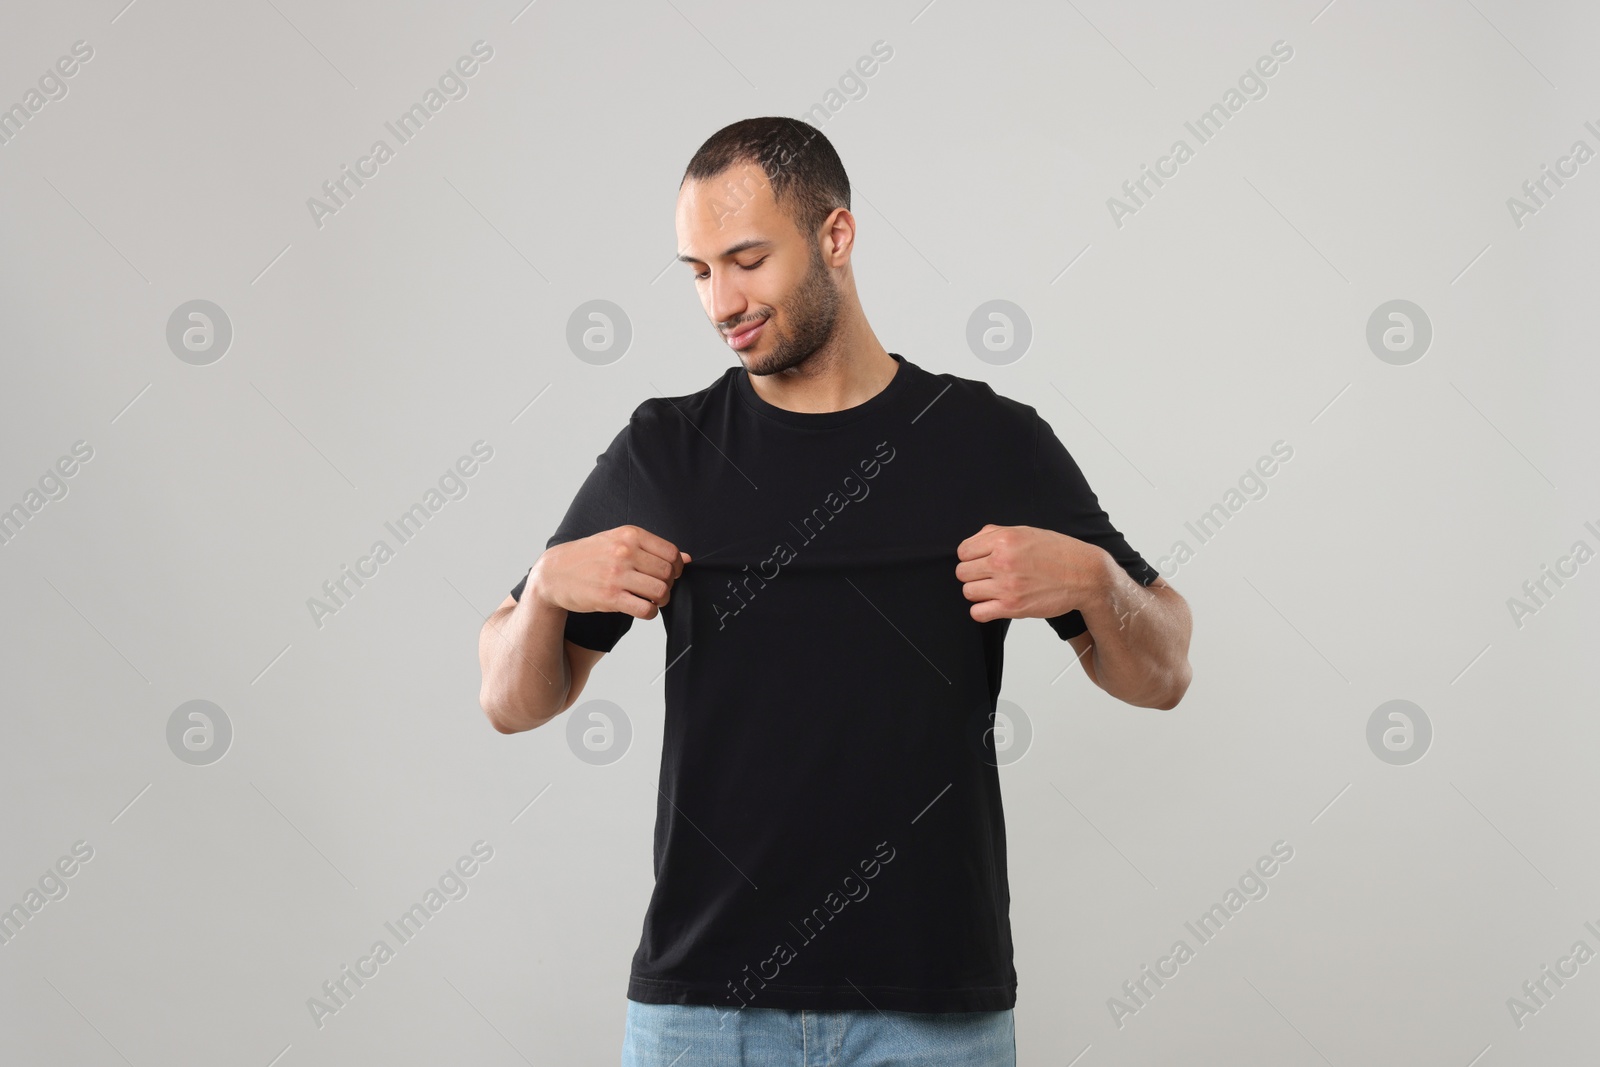 Photo of Man wearing black t-shirt on gray background